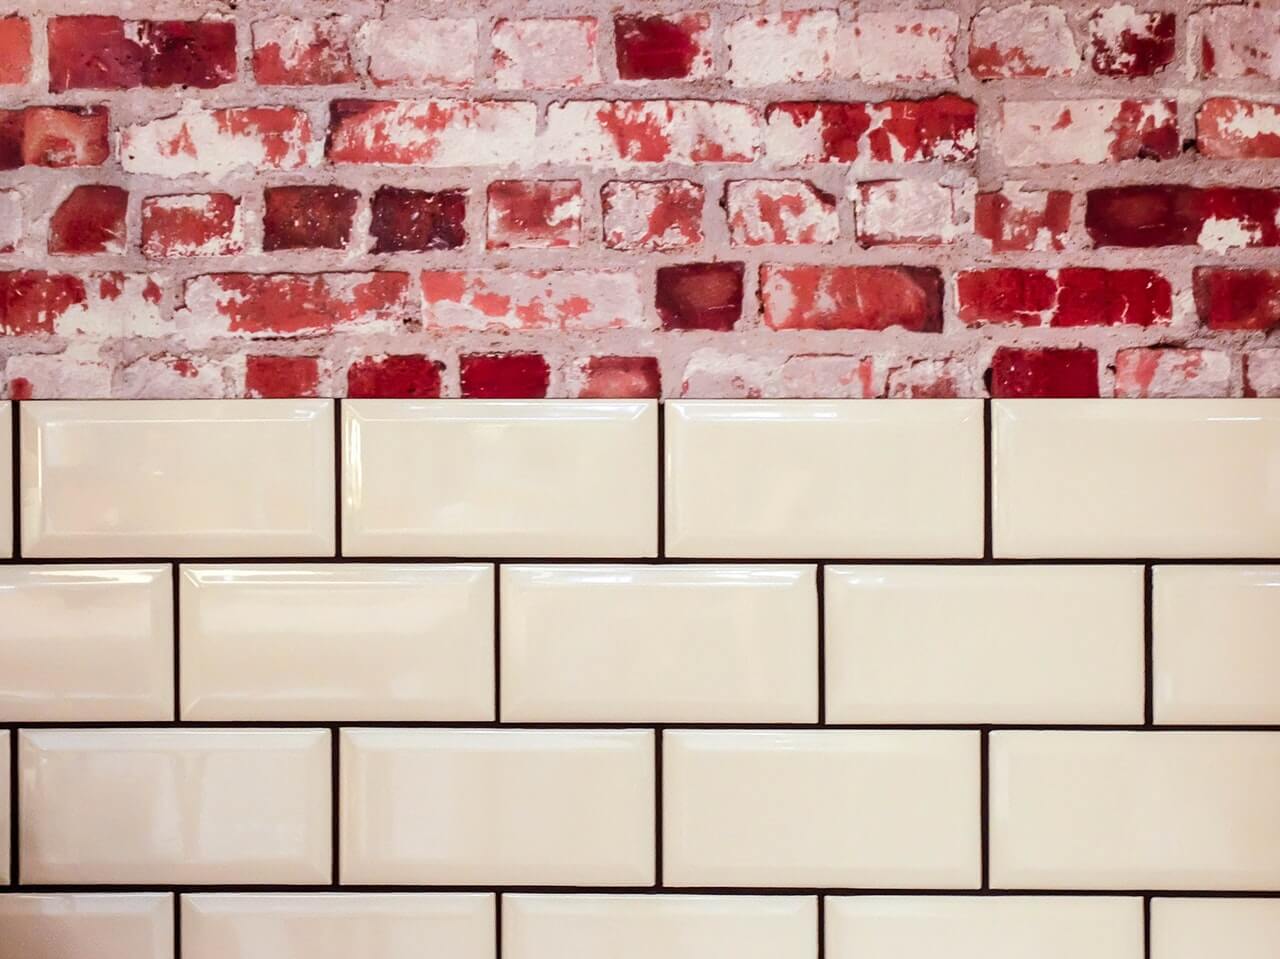 White ceramic wall beside red concrete bricks